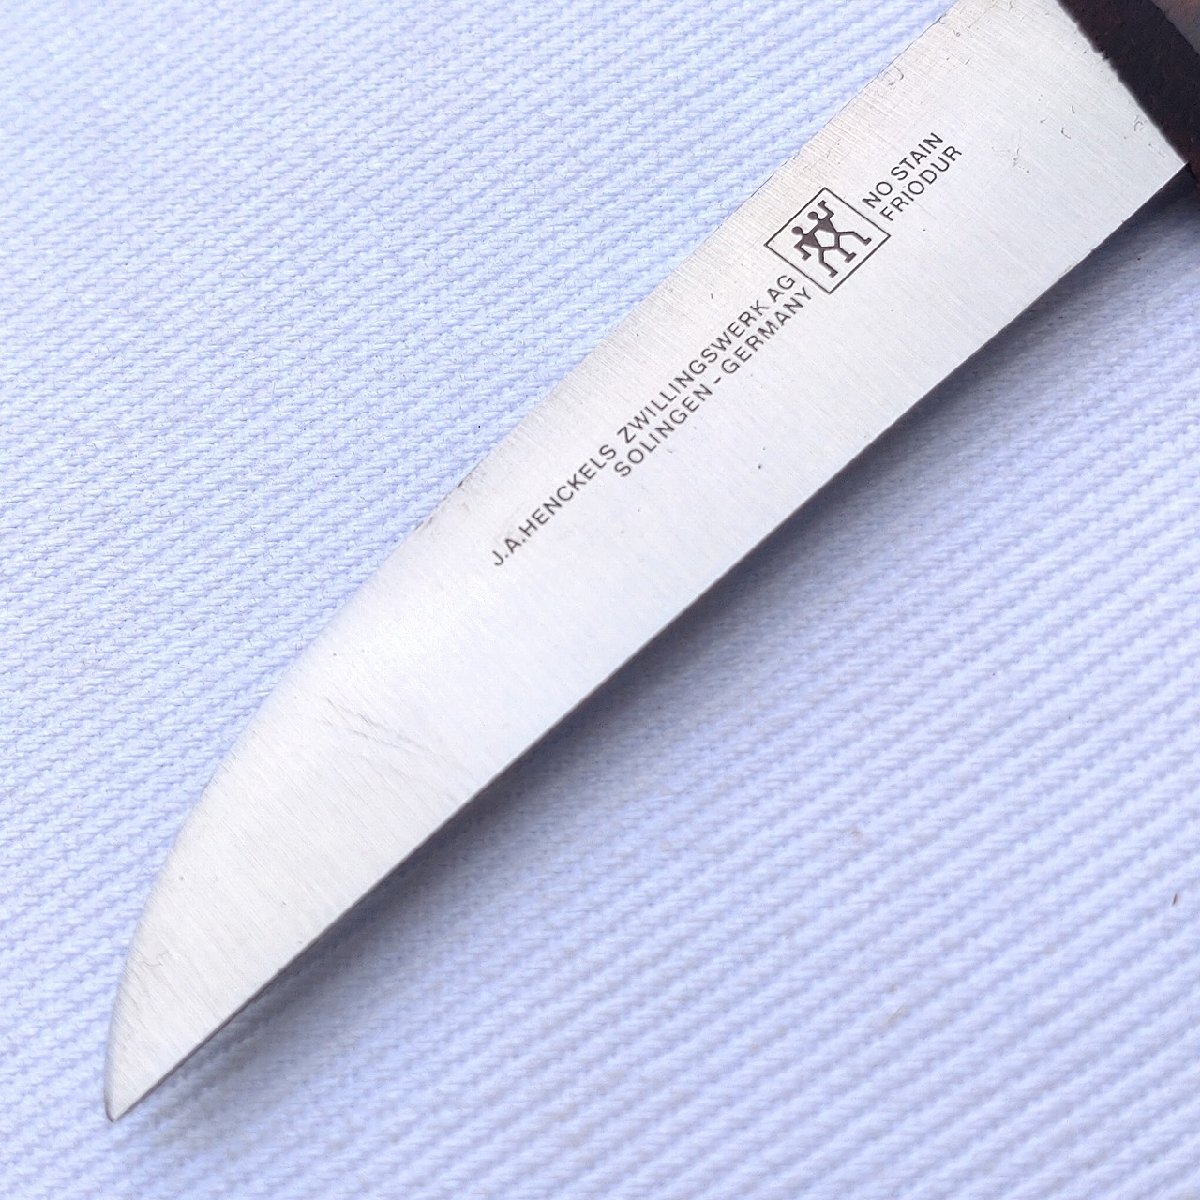 pa- кольцо нож J.A.HENCKELS ZWELLINGSWERK AG SOLINGEN-GERMANY лезвие длина примерно 65. столовый нож ножи henkerus маленький размер кухонный нож [9927]